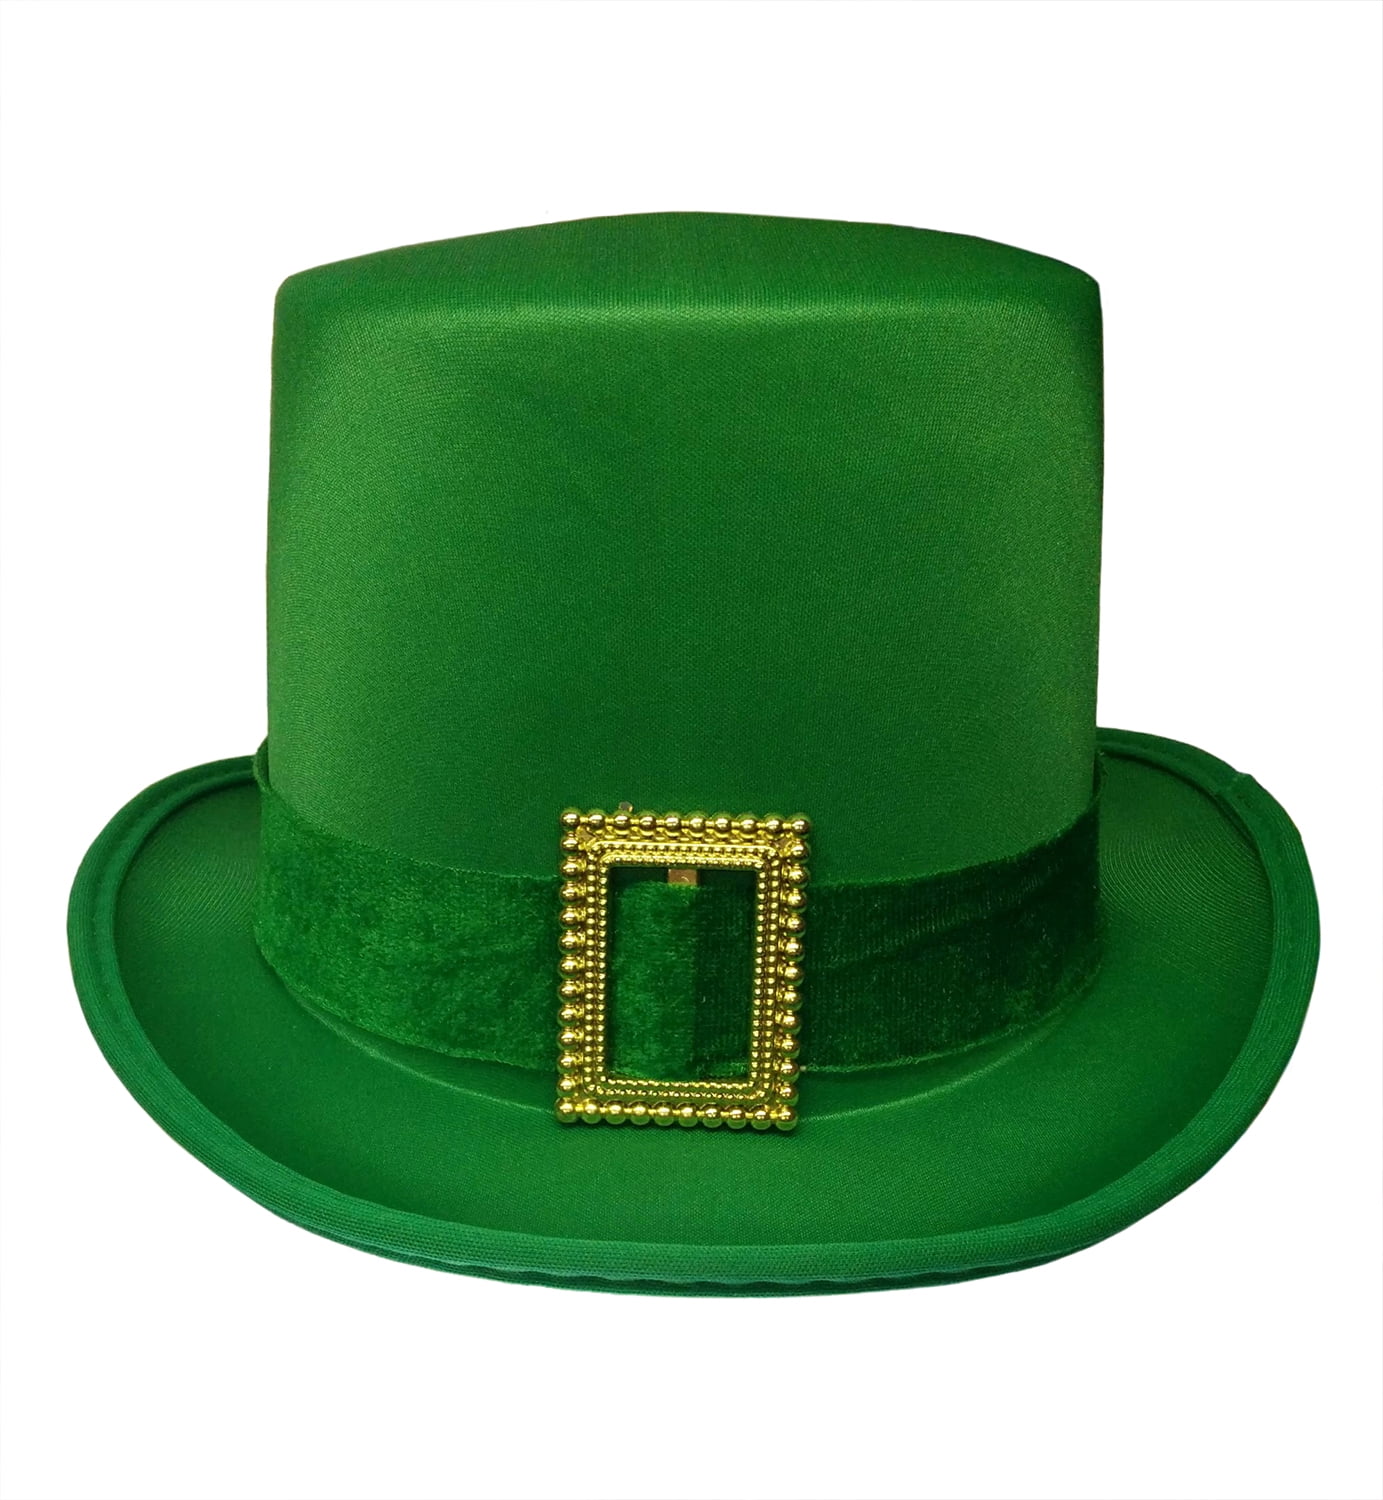 Green & White Striped Stove Top Hat St Patricks Day